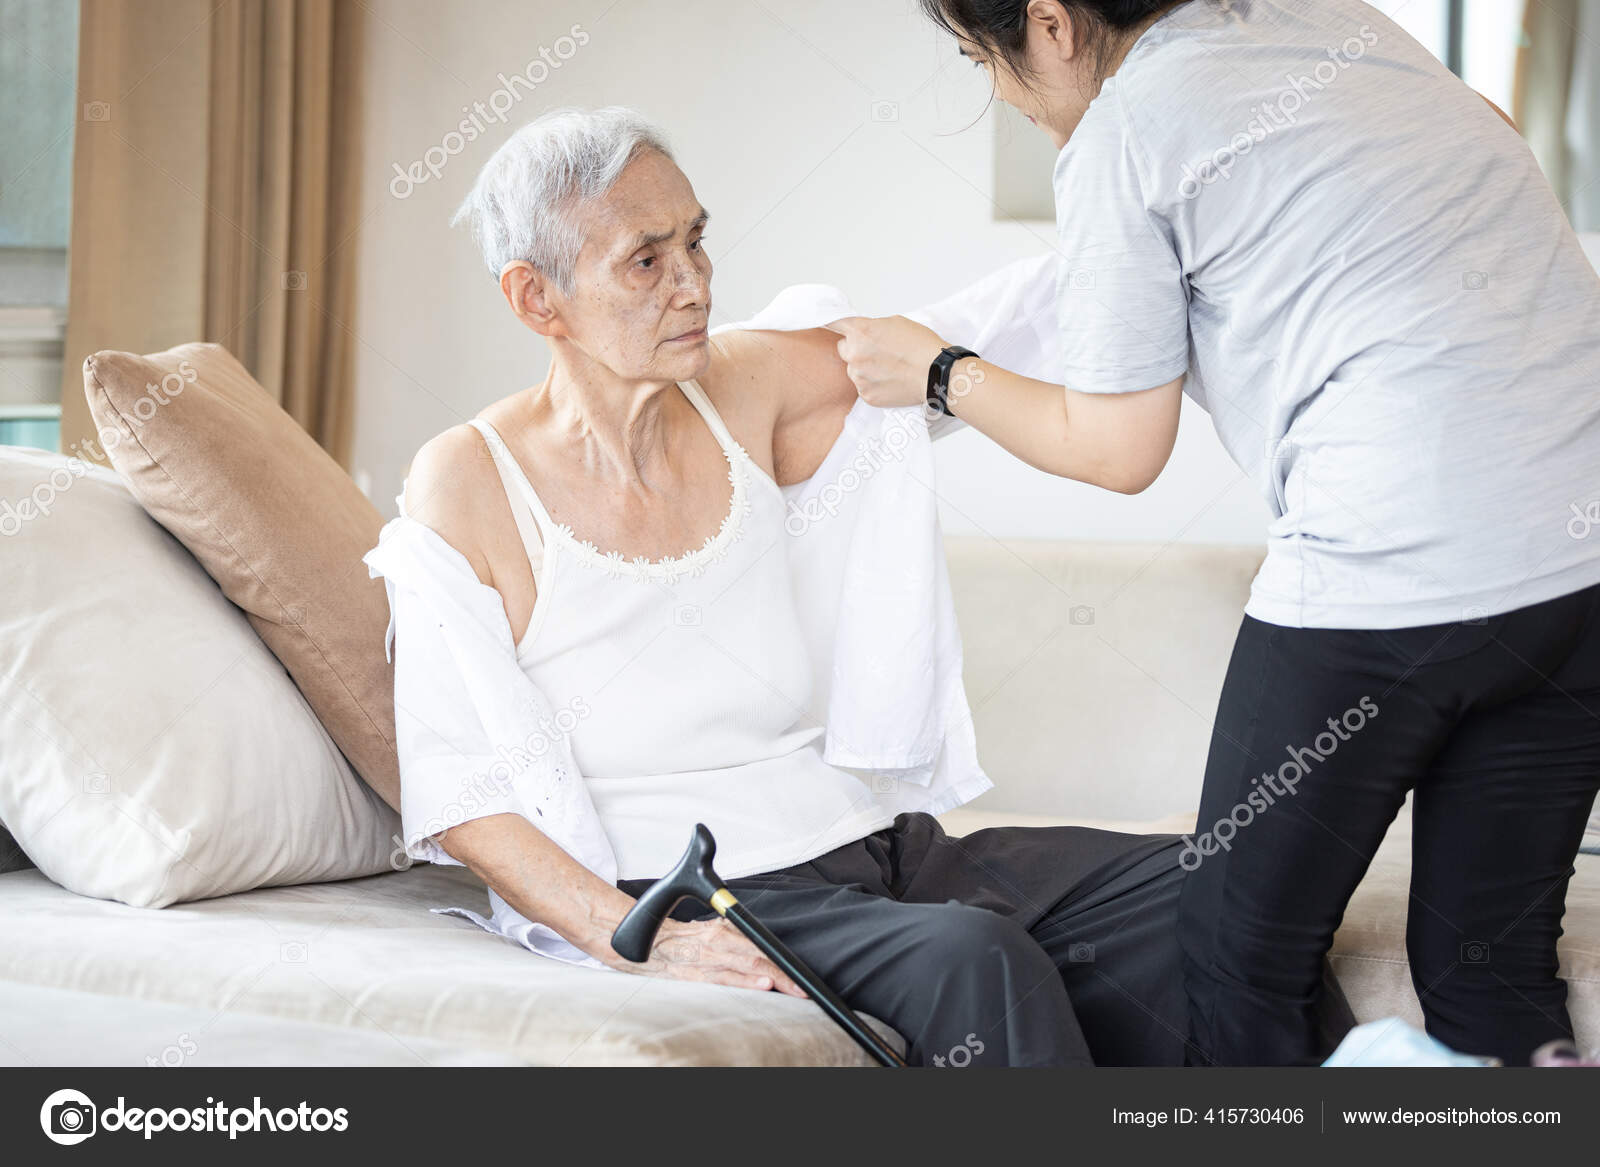 Asian Female Caregiver Taking Care Helping Elderly Patient Get Dressed